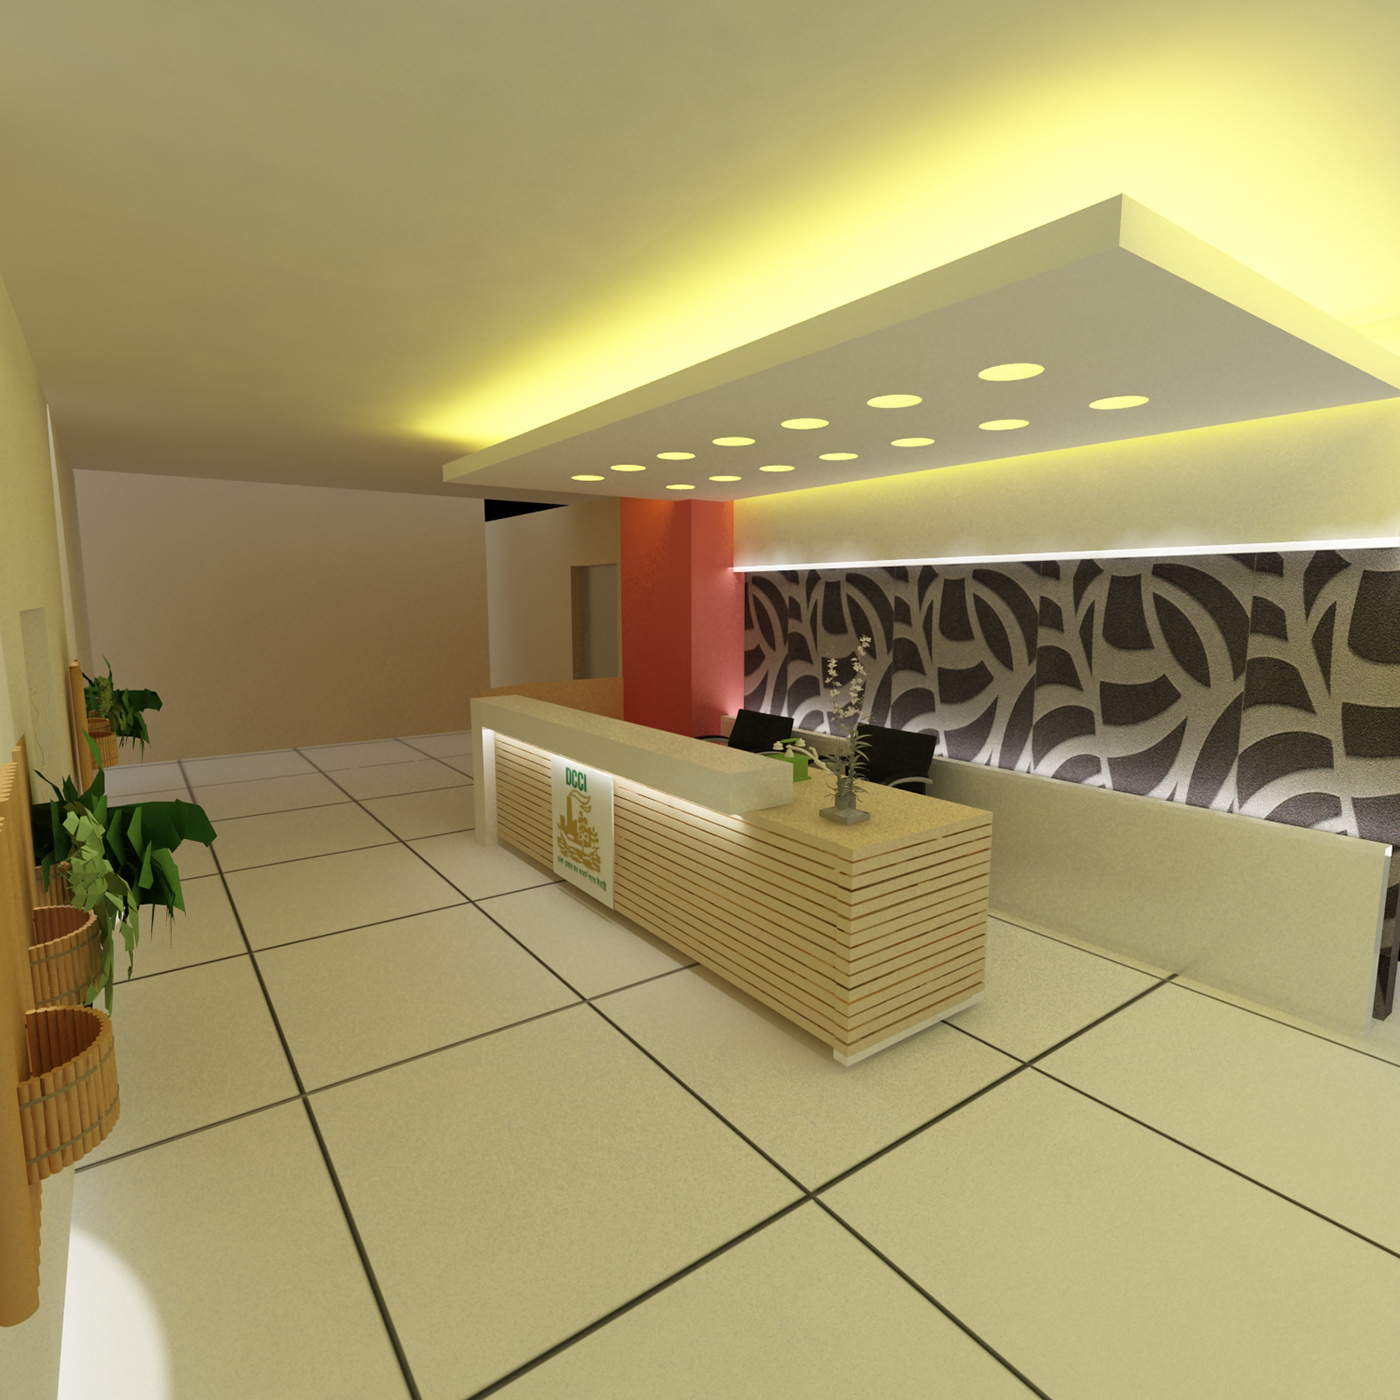 3D model Interior planning renderimage SketchUP